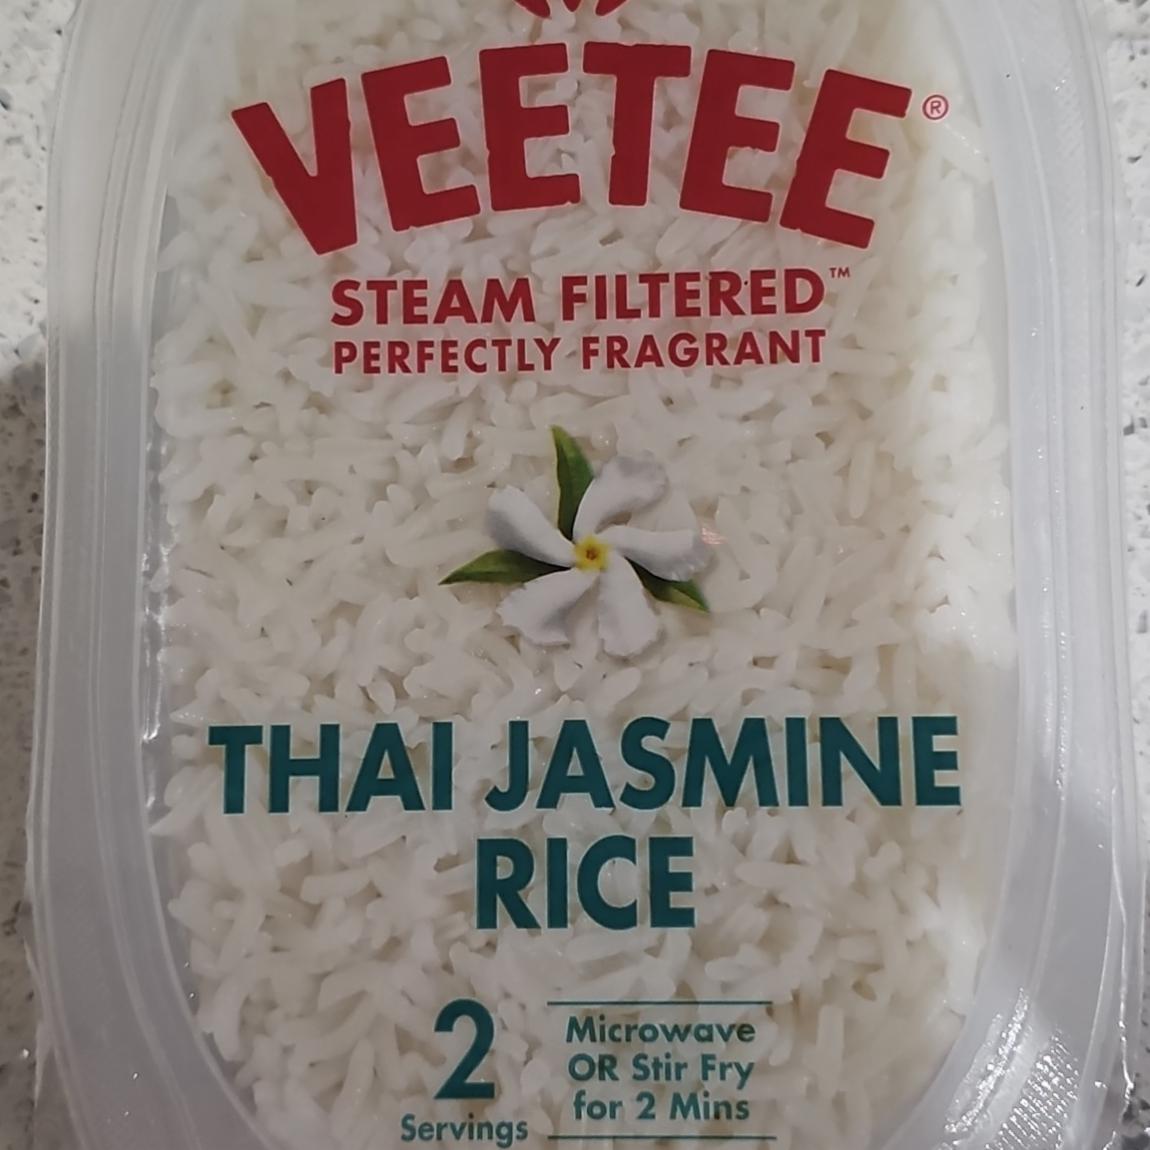 Fotografie - Thai Jasmine Rice Veetee